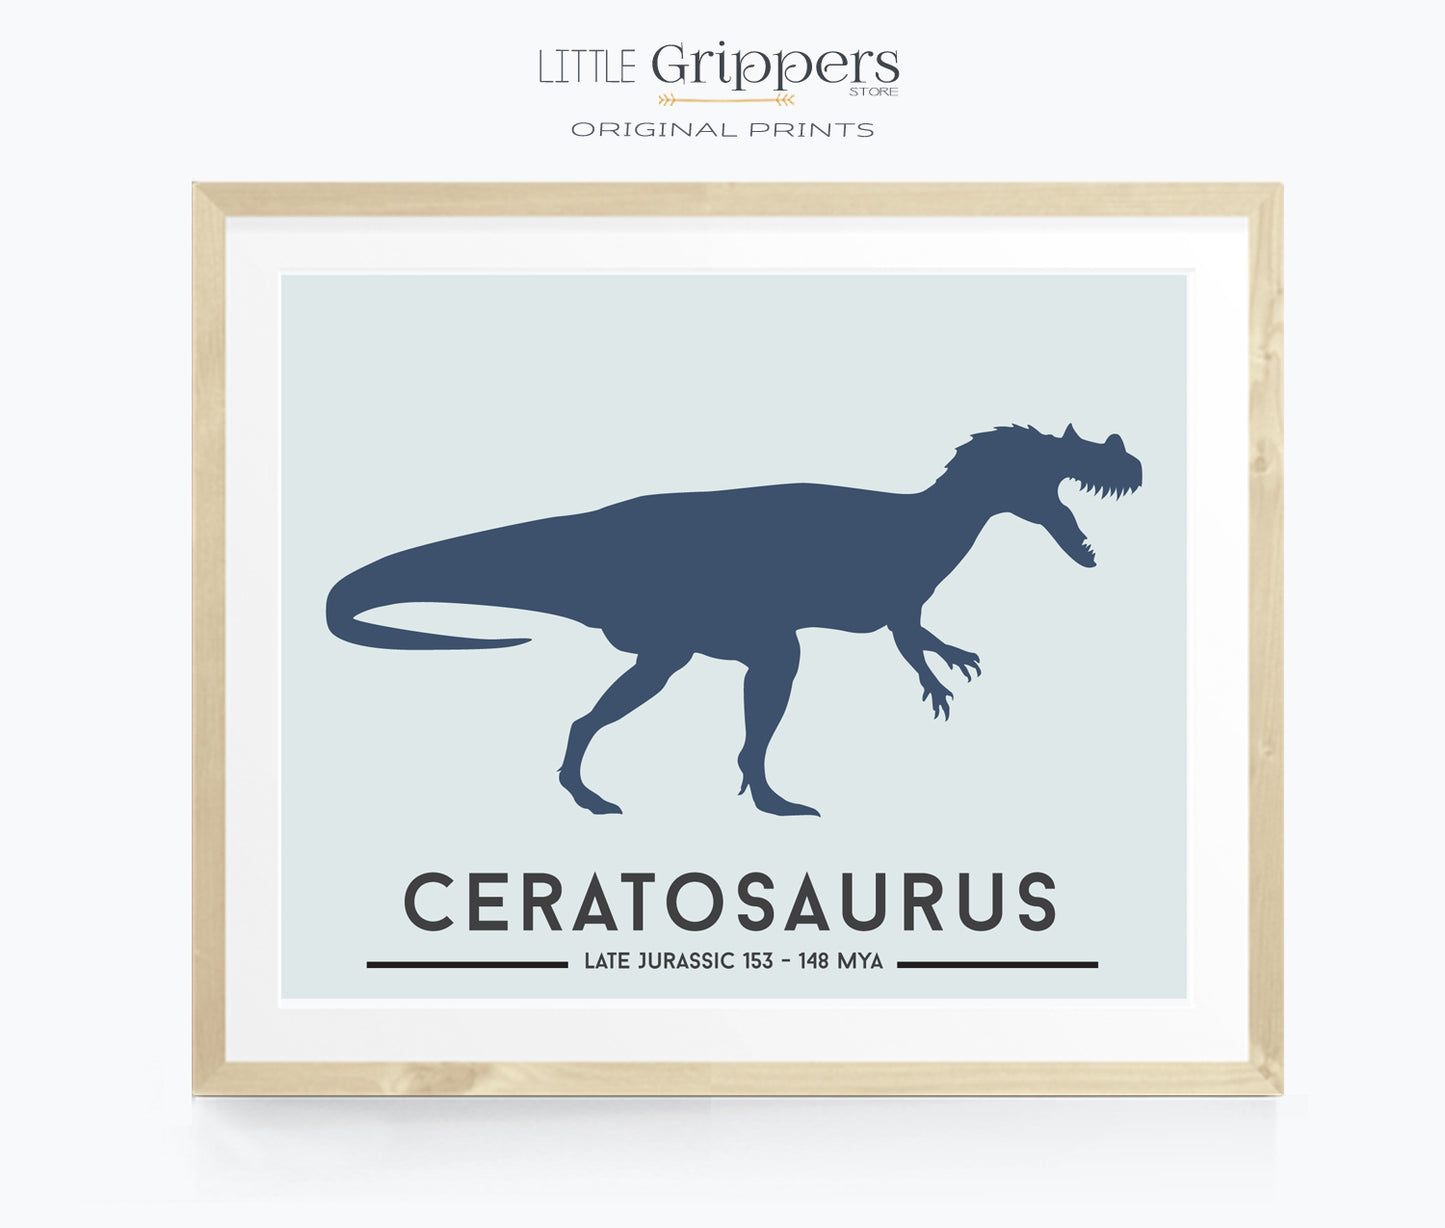 Ceratosaurus Dinosaur print